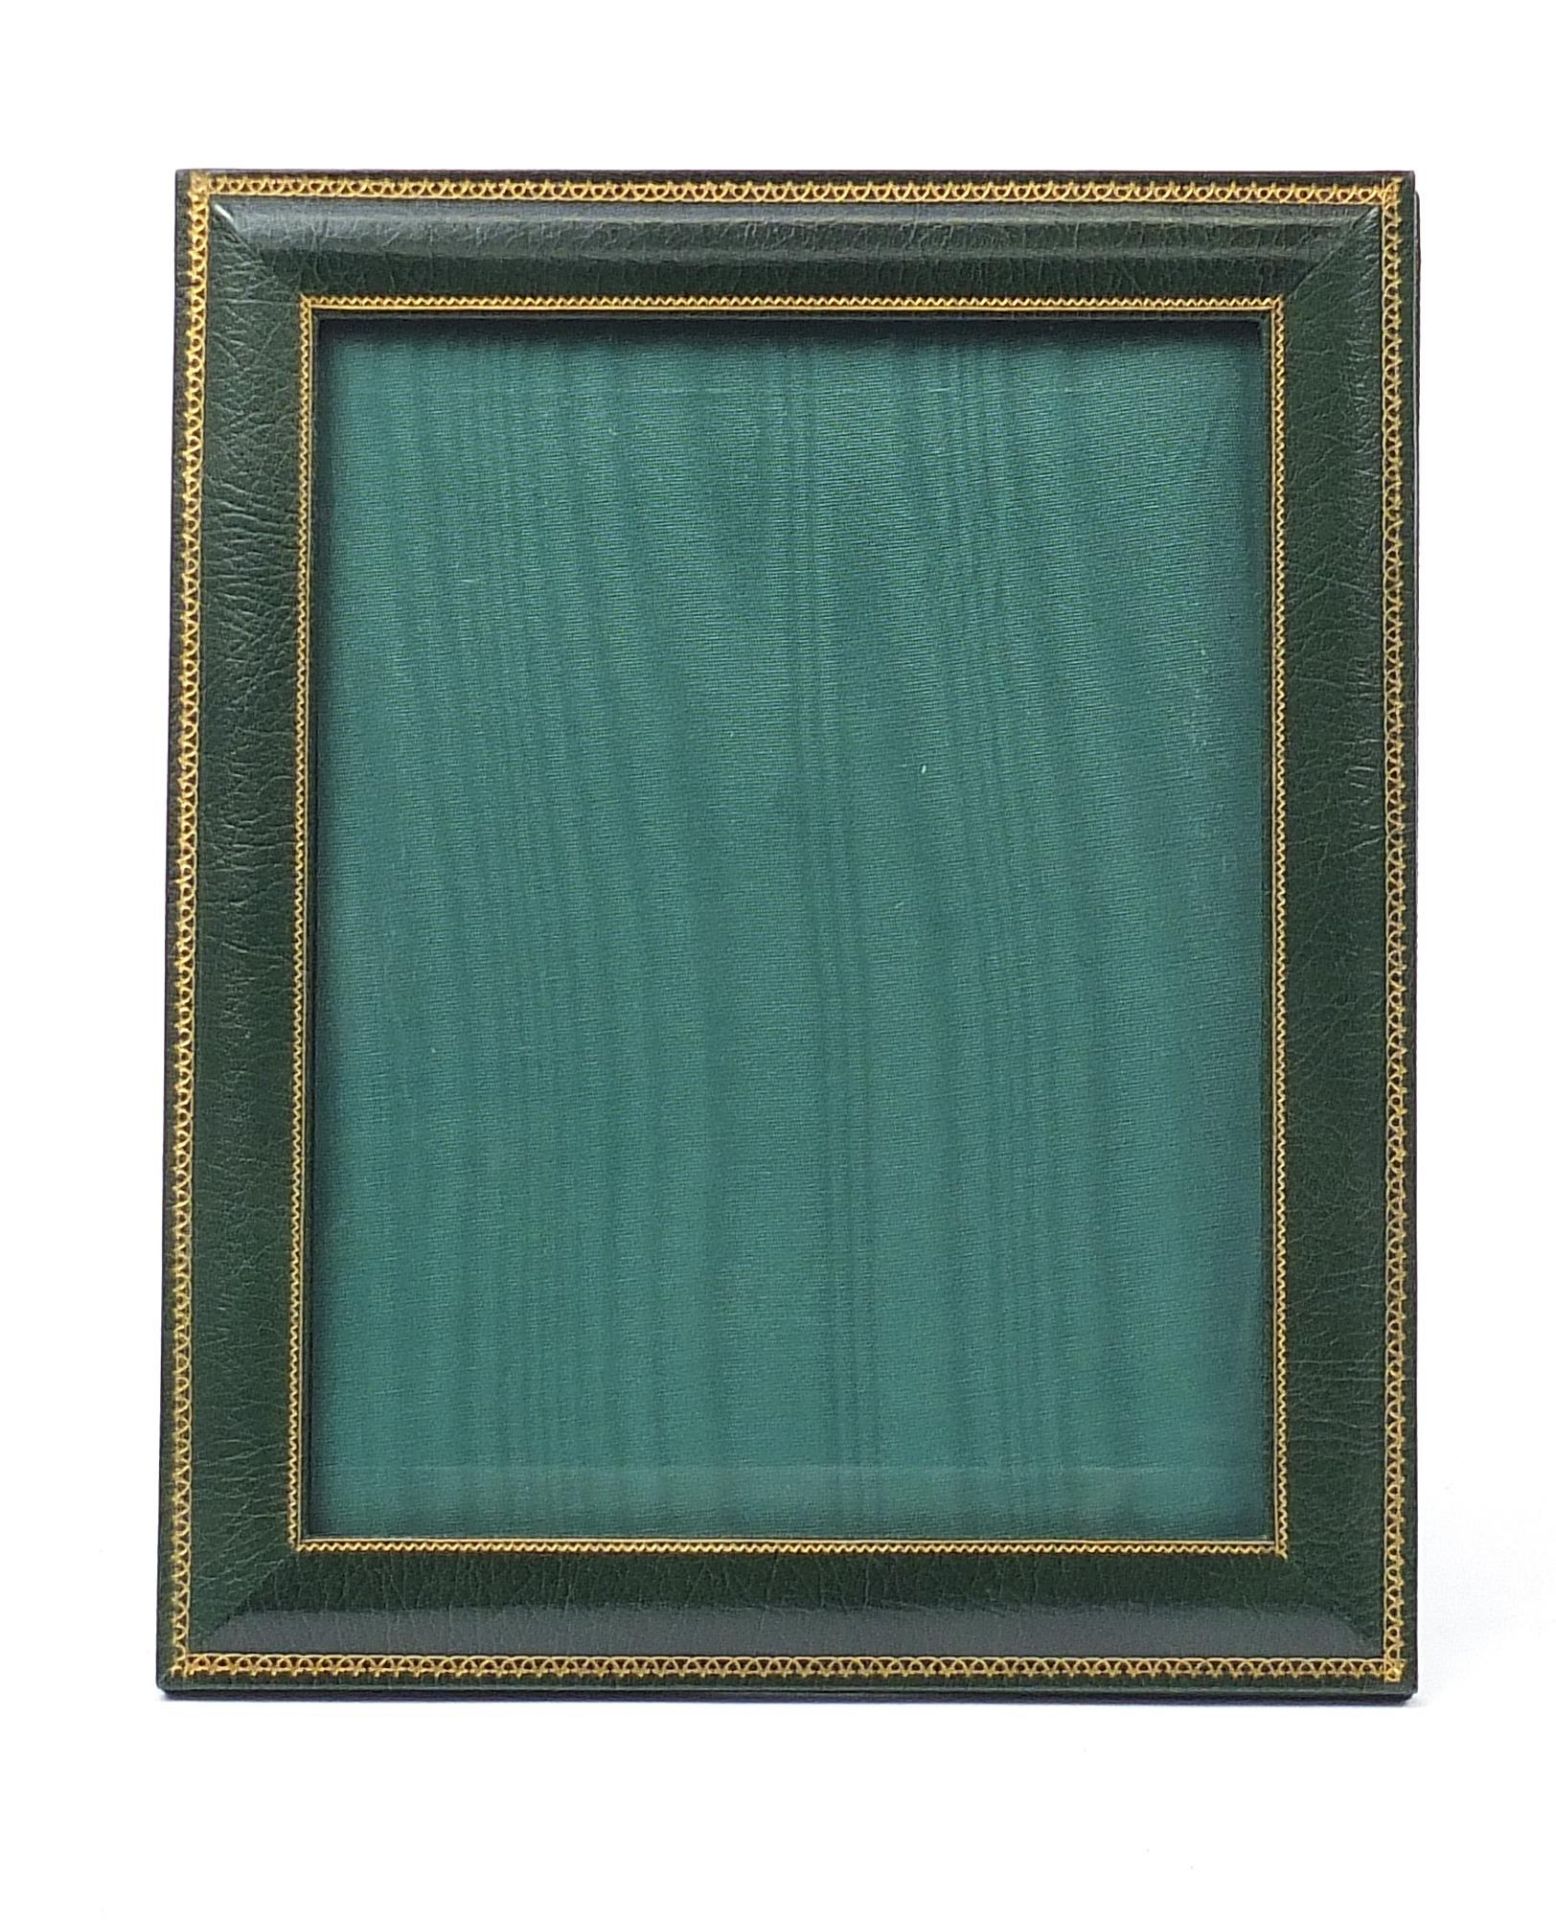 Asprey tooled leather easel photo frame with box, 28.5cm x 23.5cm, aperture size 22.5cm x 17.5cm - Bild 2 aus 5